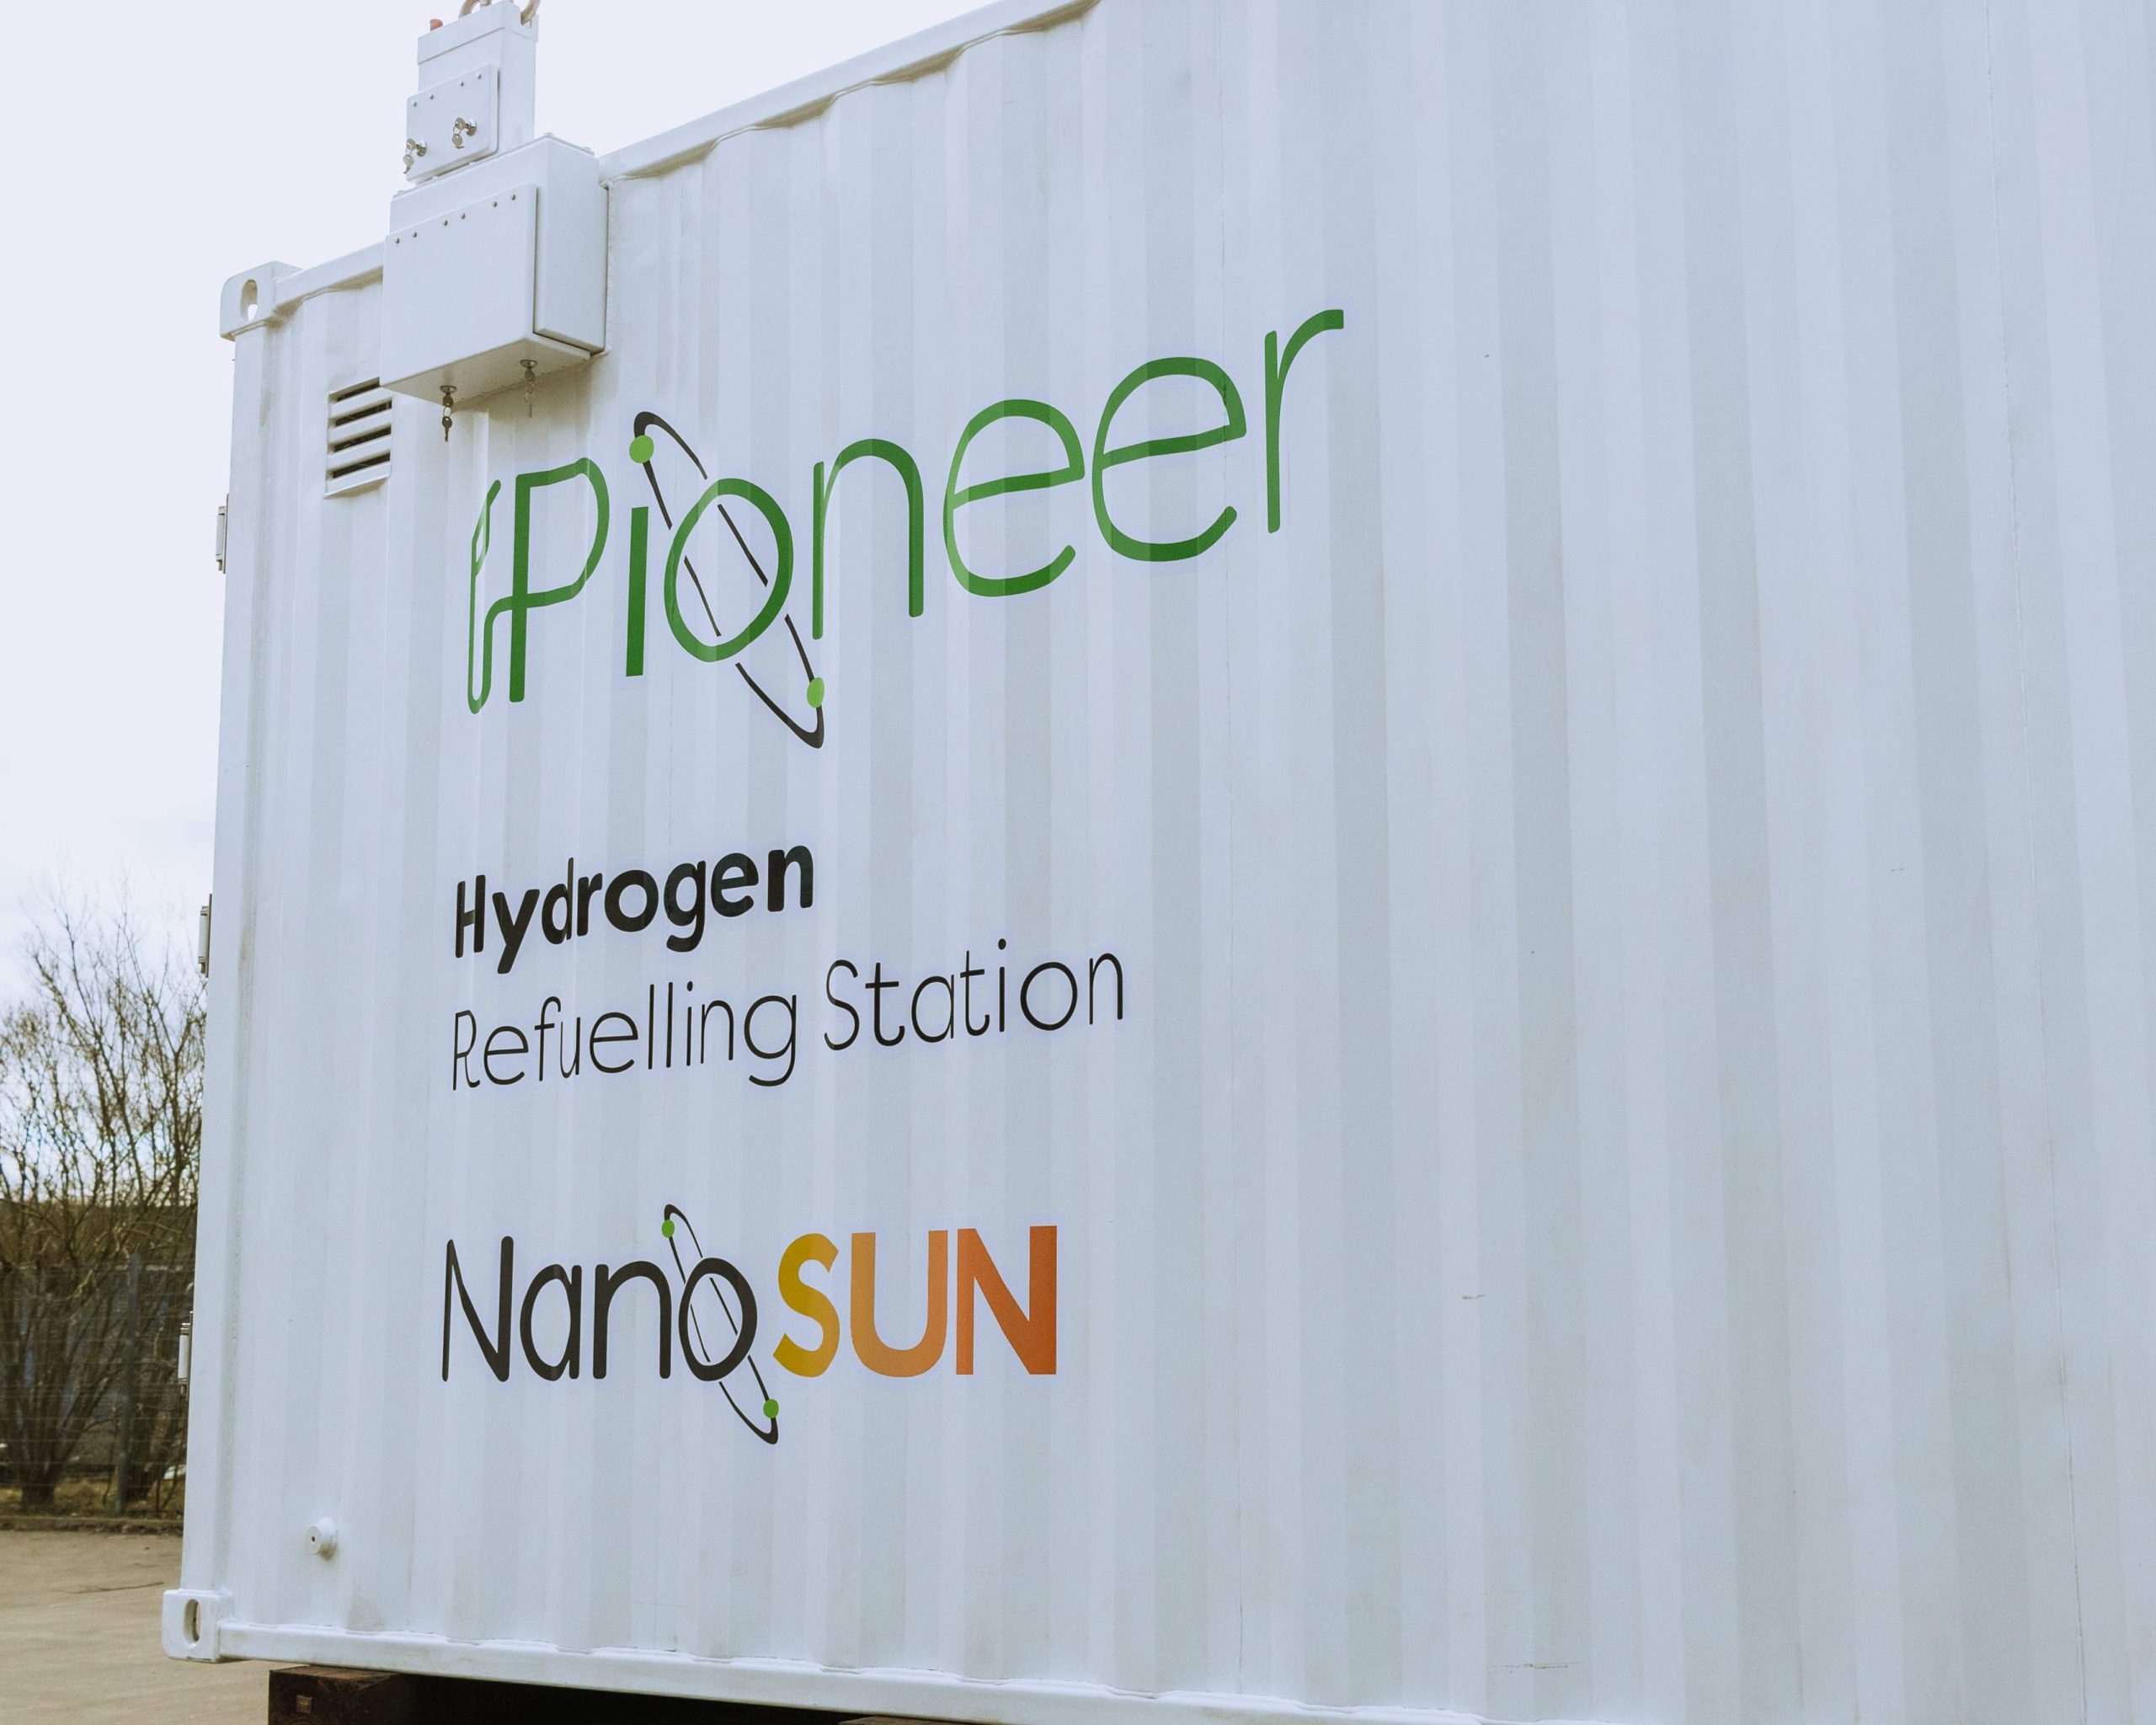 NanoSUN: Accelerating Hydrogen-powered Mobility 